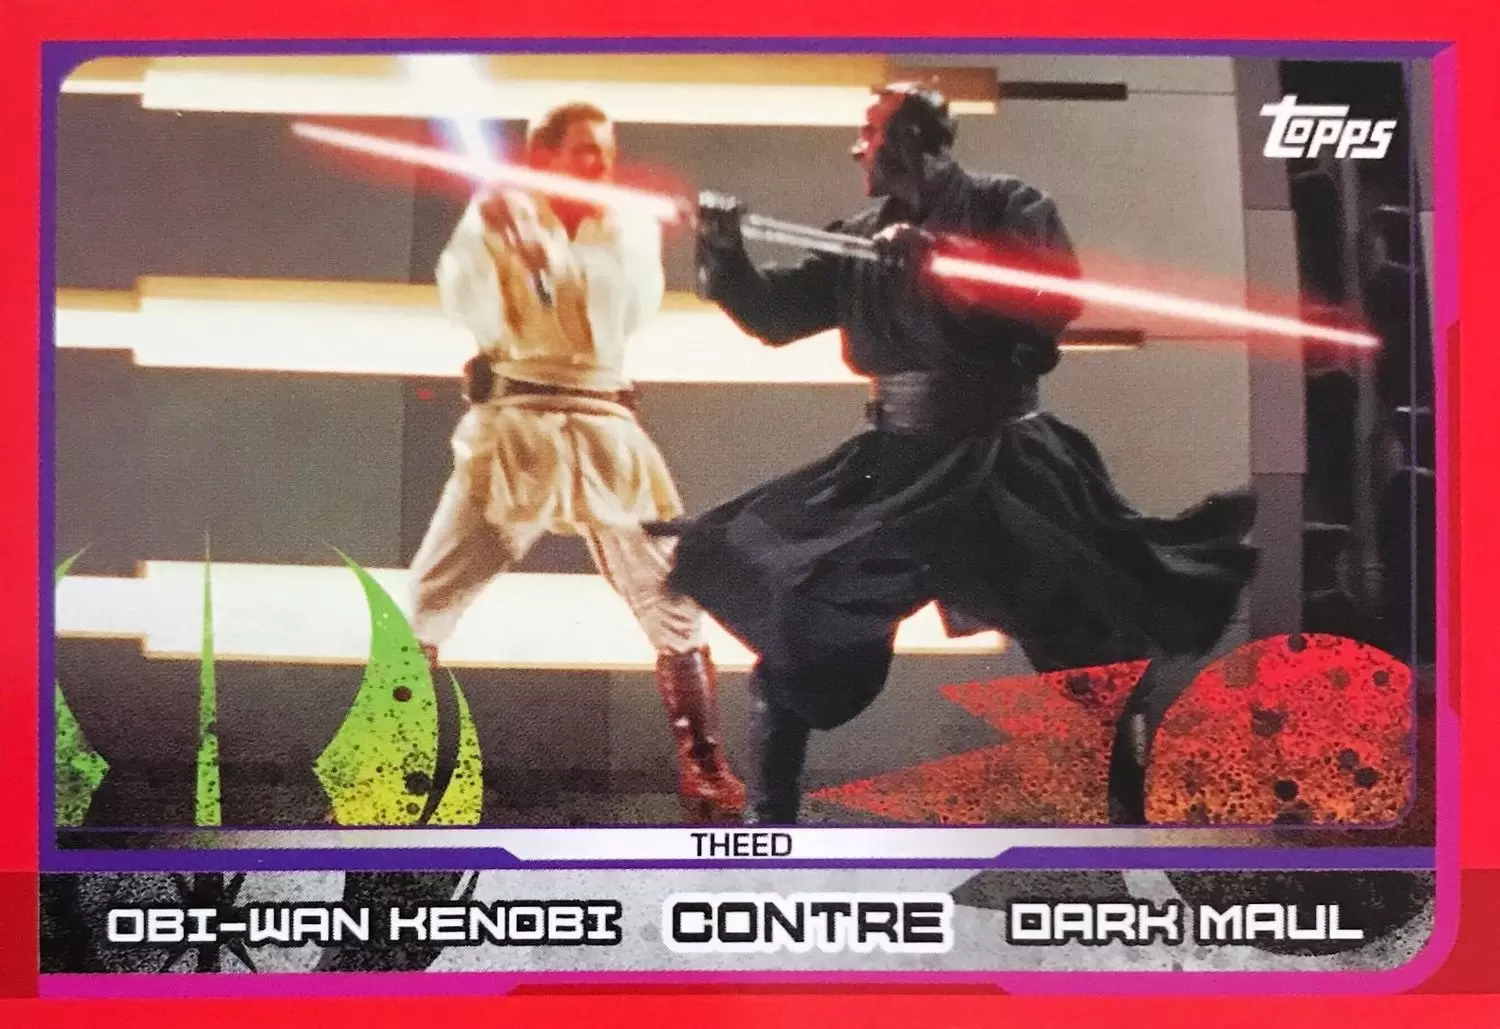 Topps - Voyage vers Star wars : Les Derniers Jedi - Obi-Wan Kenobi contre Dark Maul (Theed)